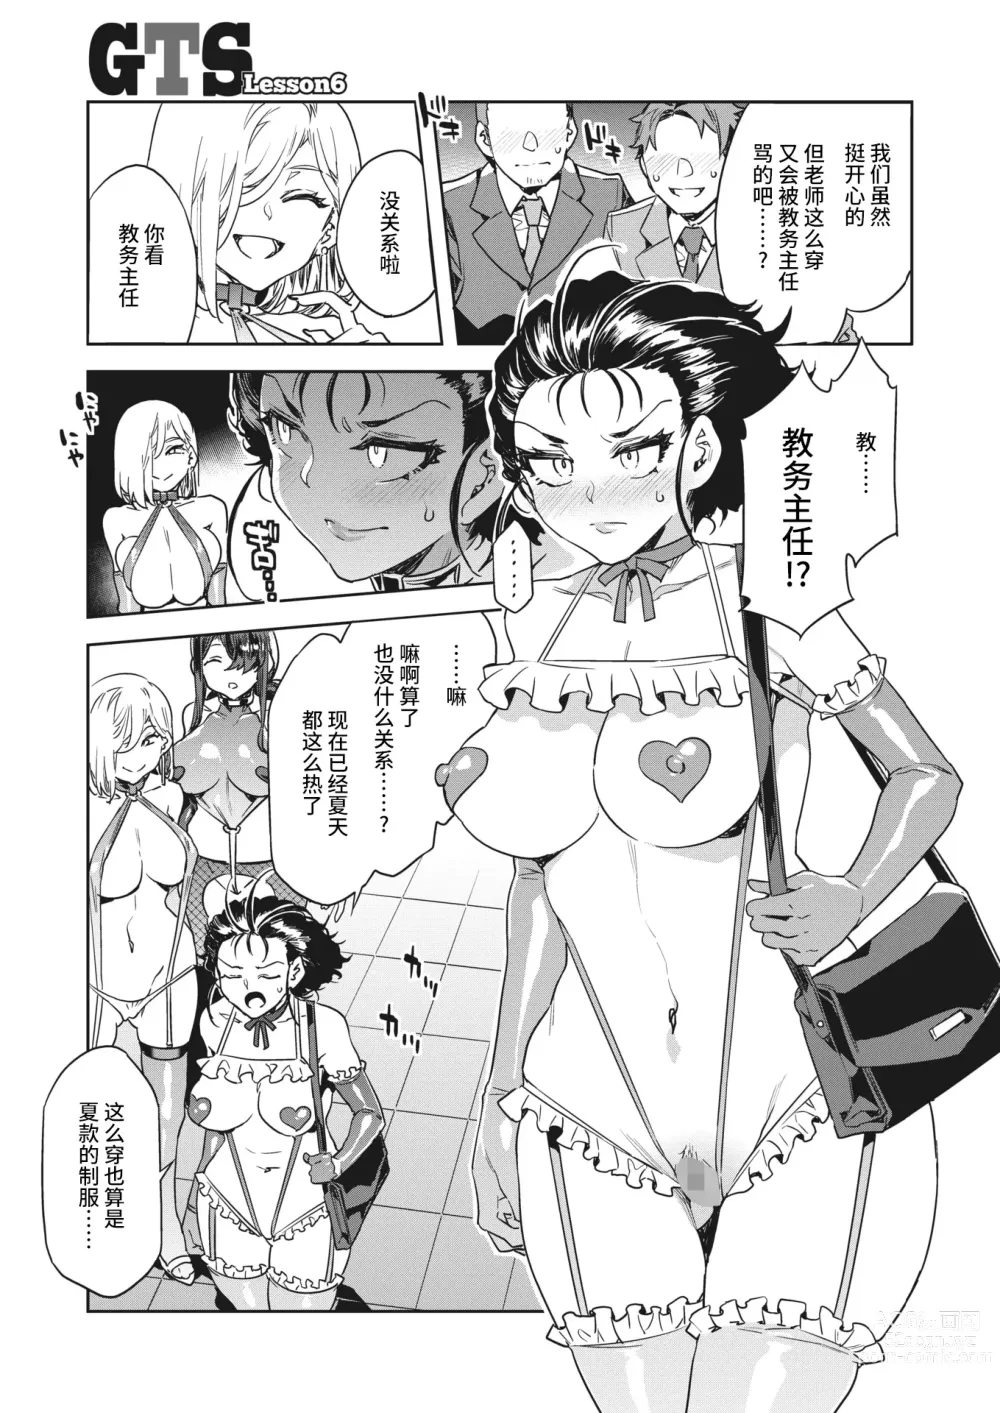 Page 21 of manga GTS Great Teacher Sayoko Lesson 6